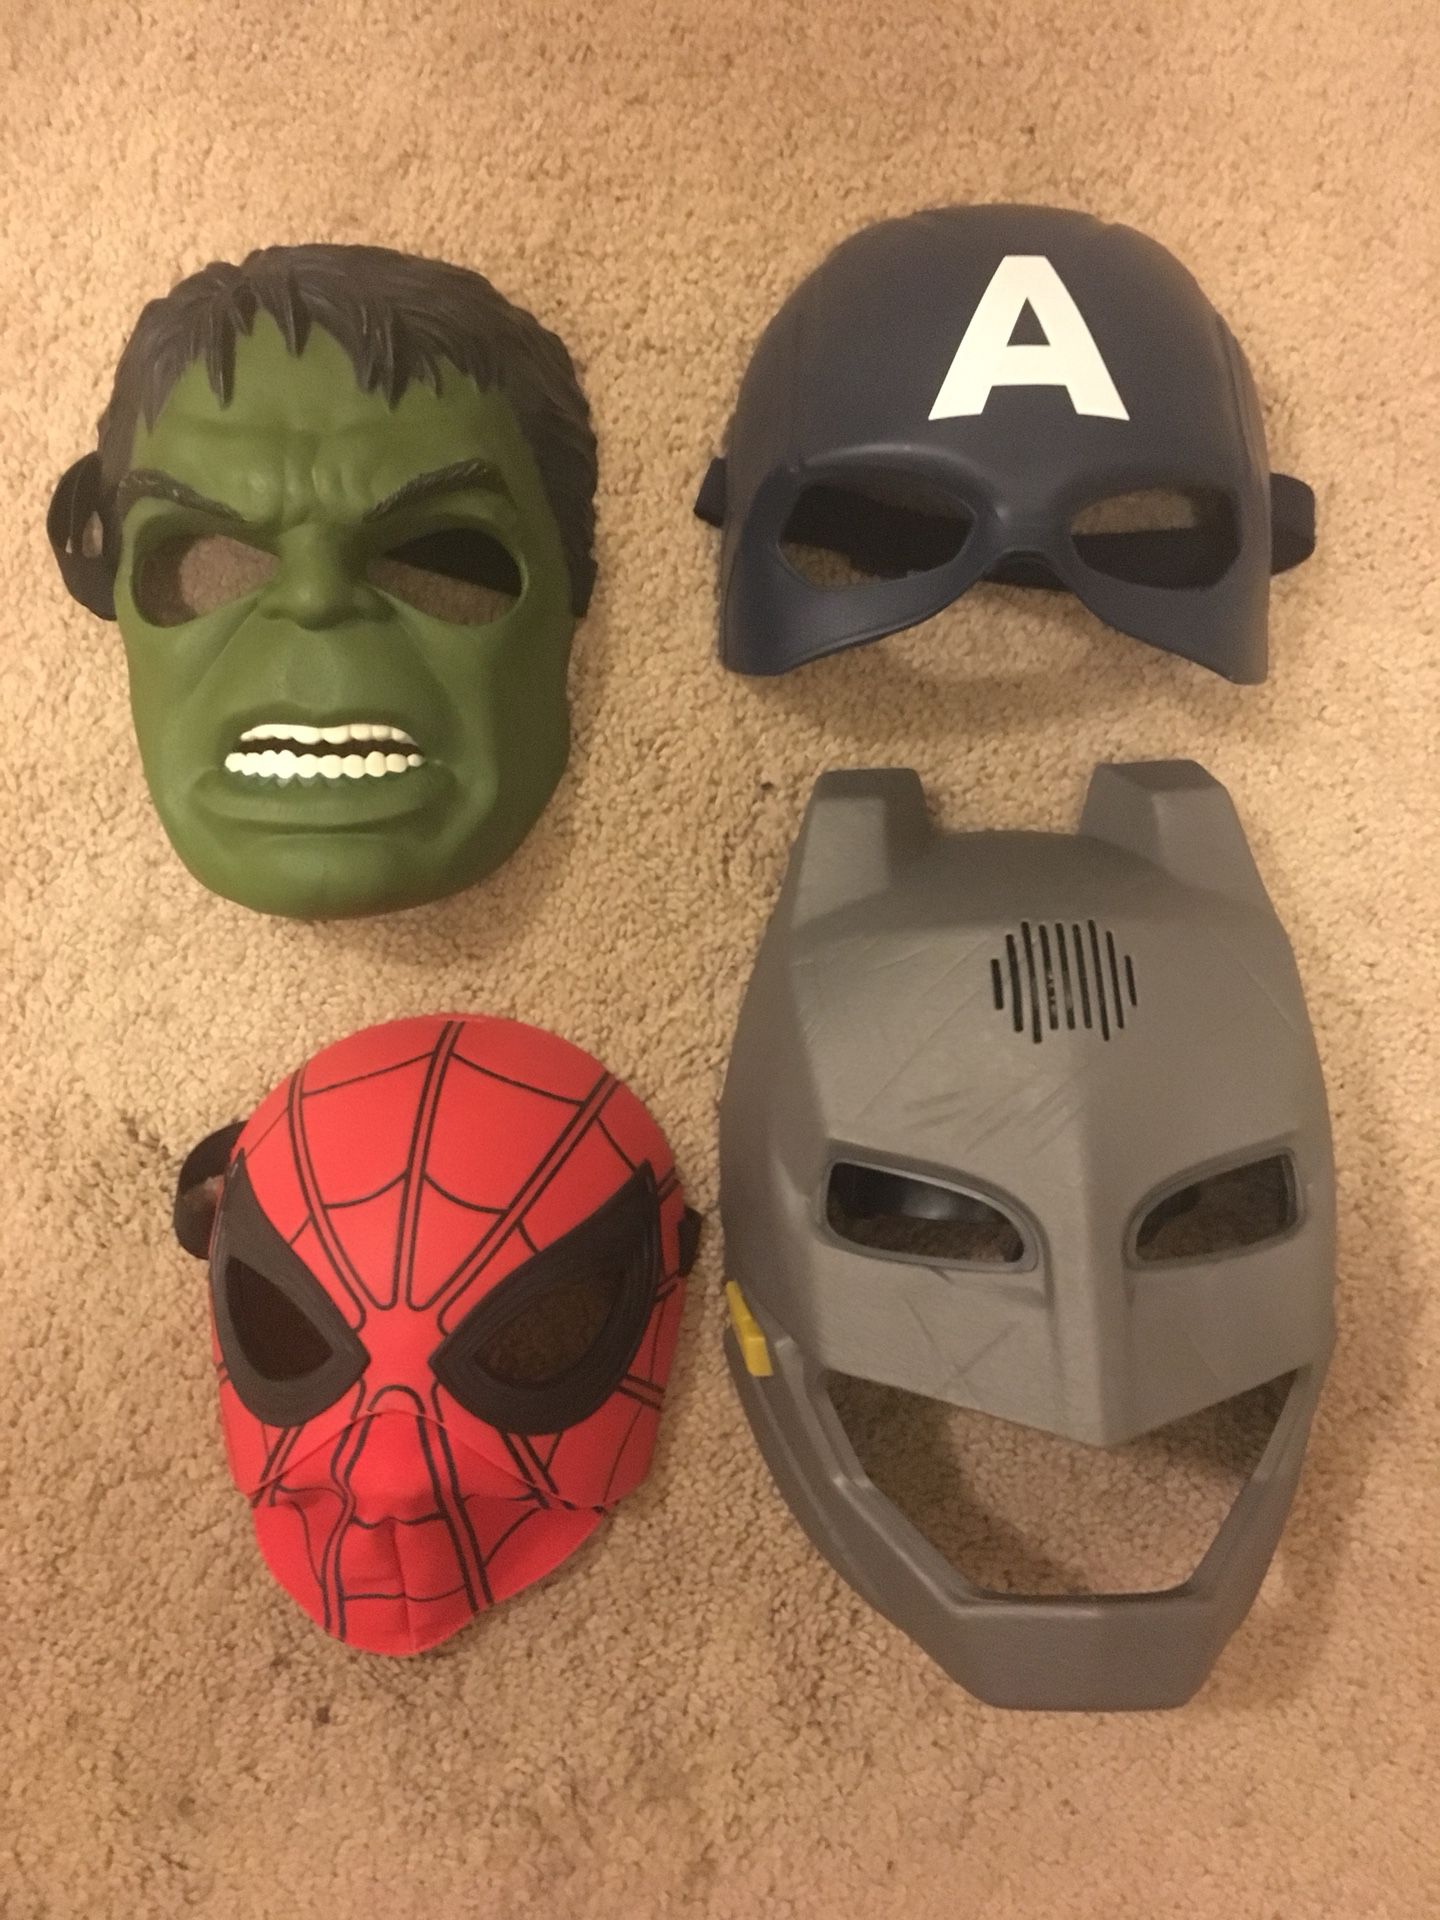 Superhero masks